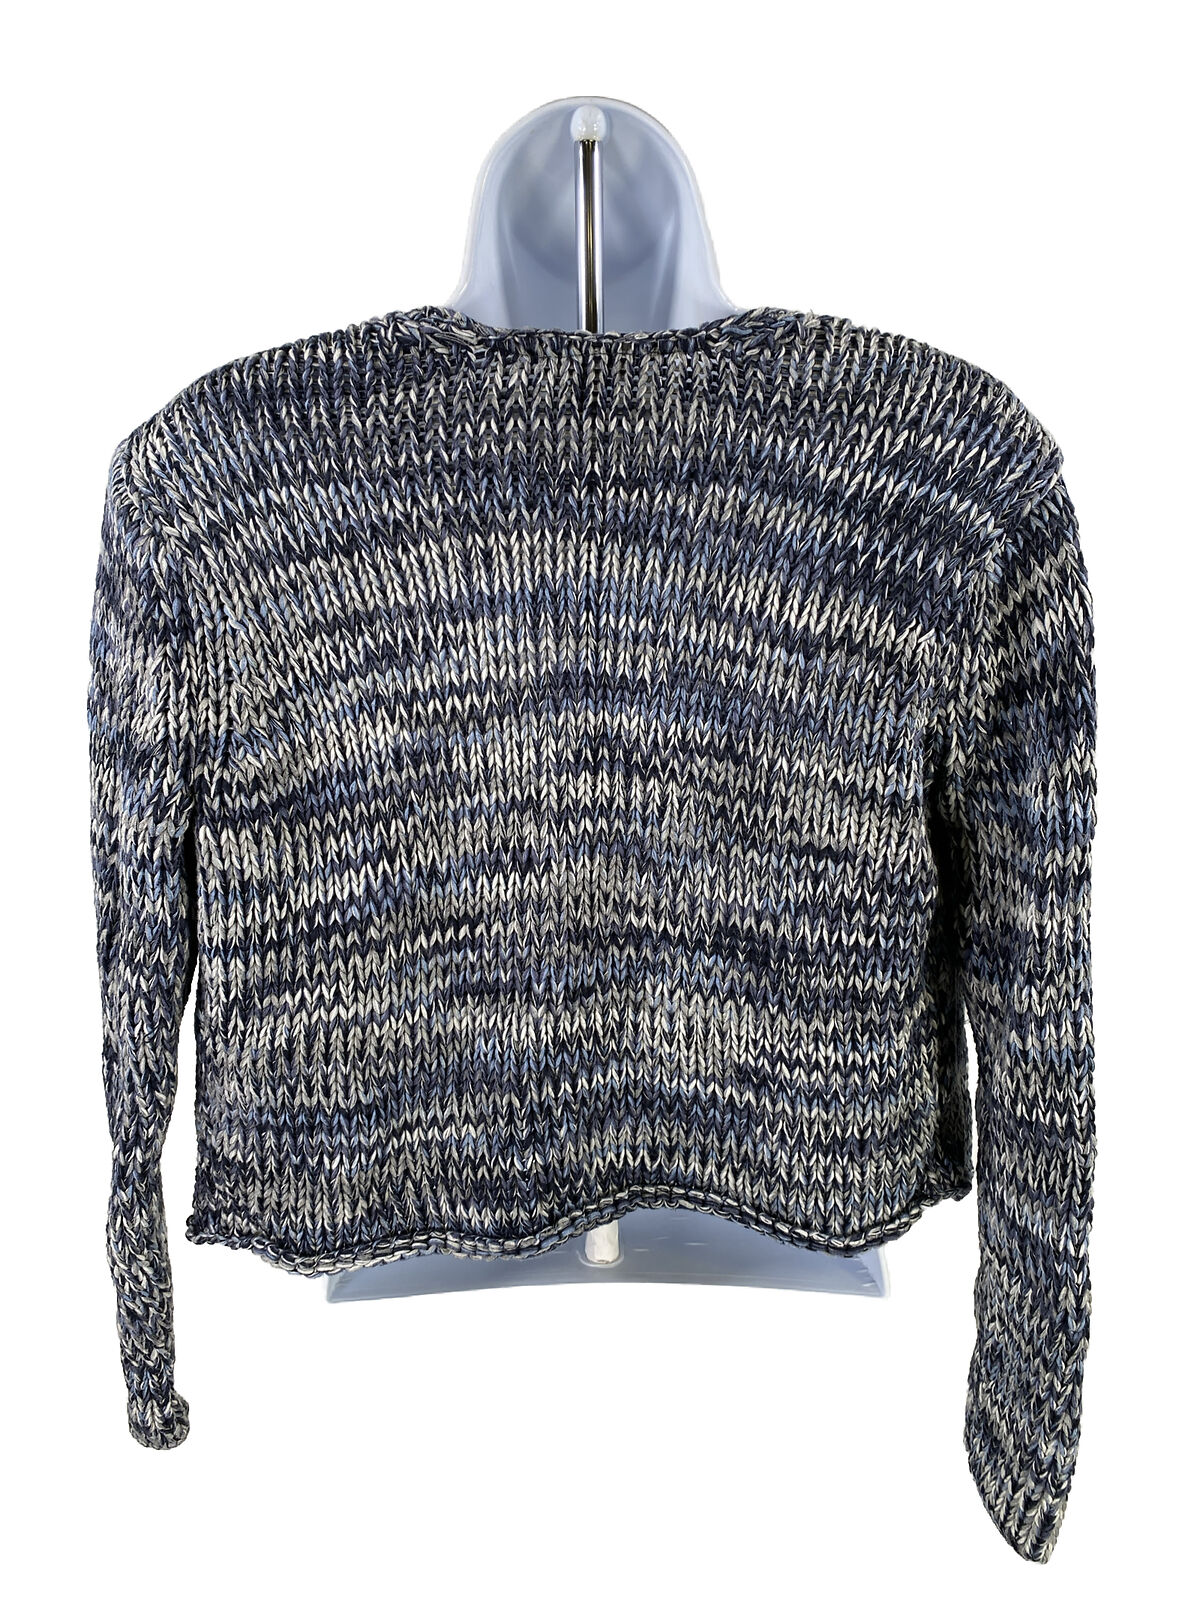 J. Jill Women's Blue Woven Knit Shrug Cardigan Sweater - Petite S